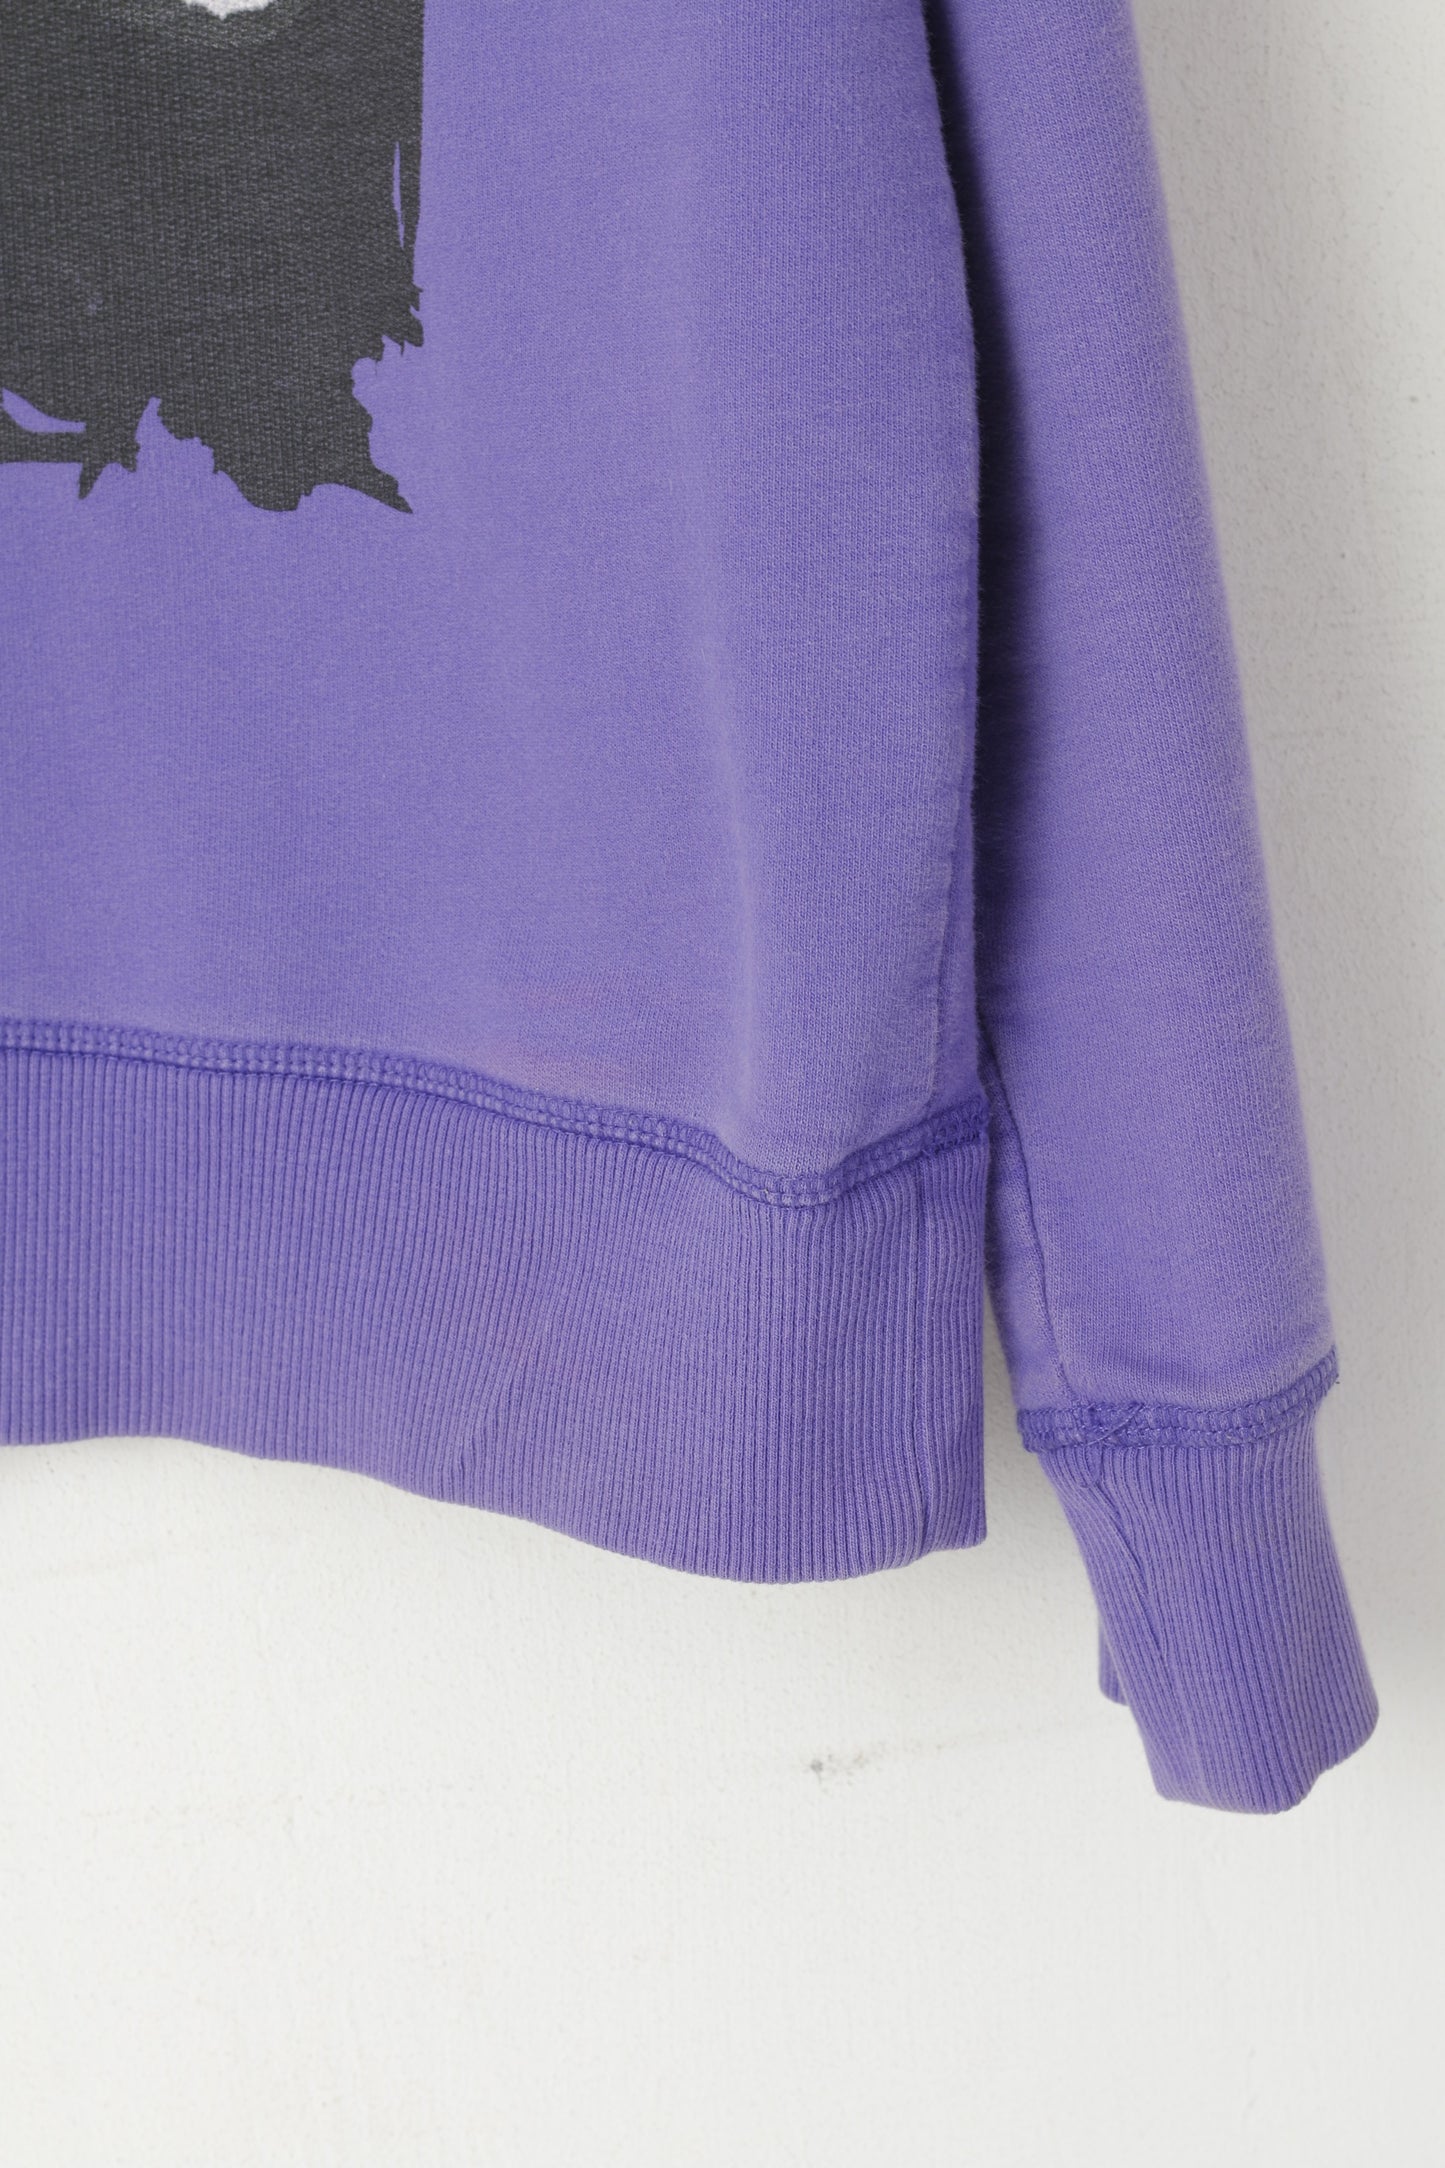 Projekts $ Men L Sweatshirt Purple Cotton Dollars Make Dreams NYC Blouse Top